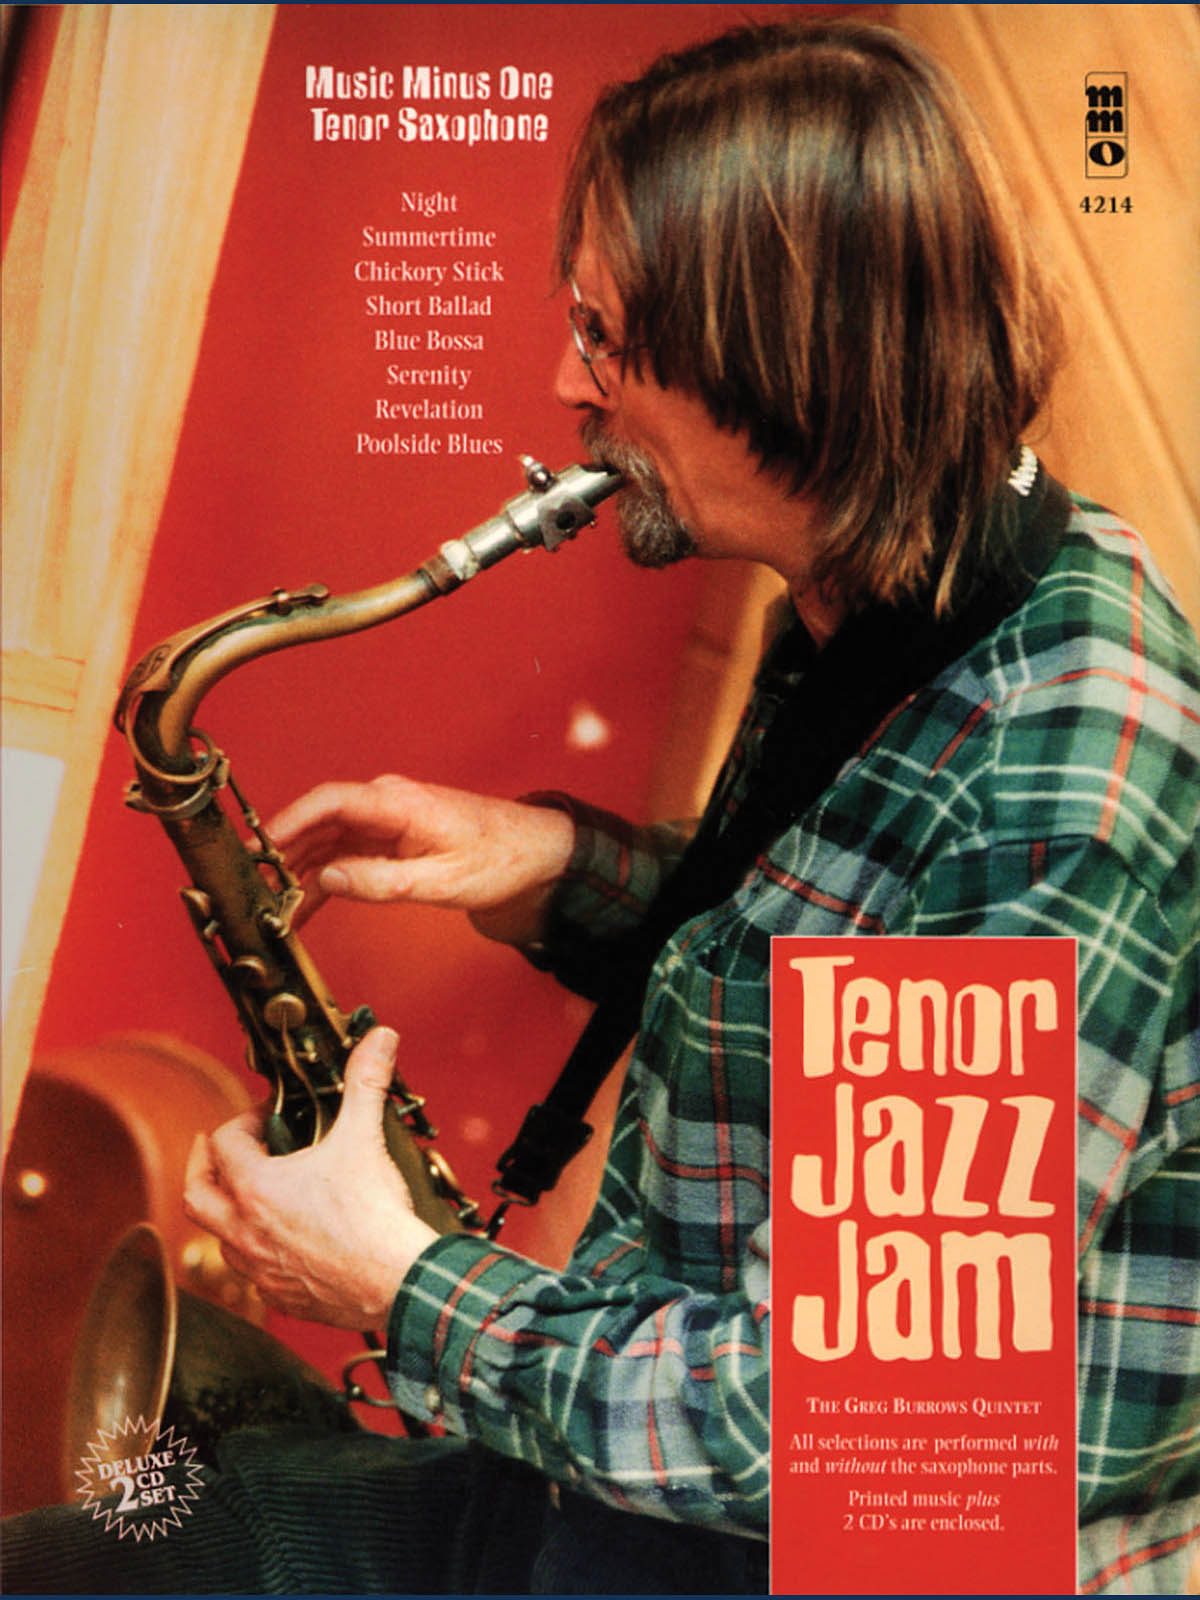 Tenor Jazz Jam: Tenor Saxophone: Instrumental Album